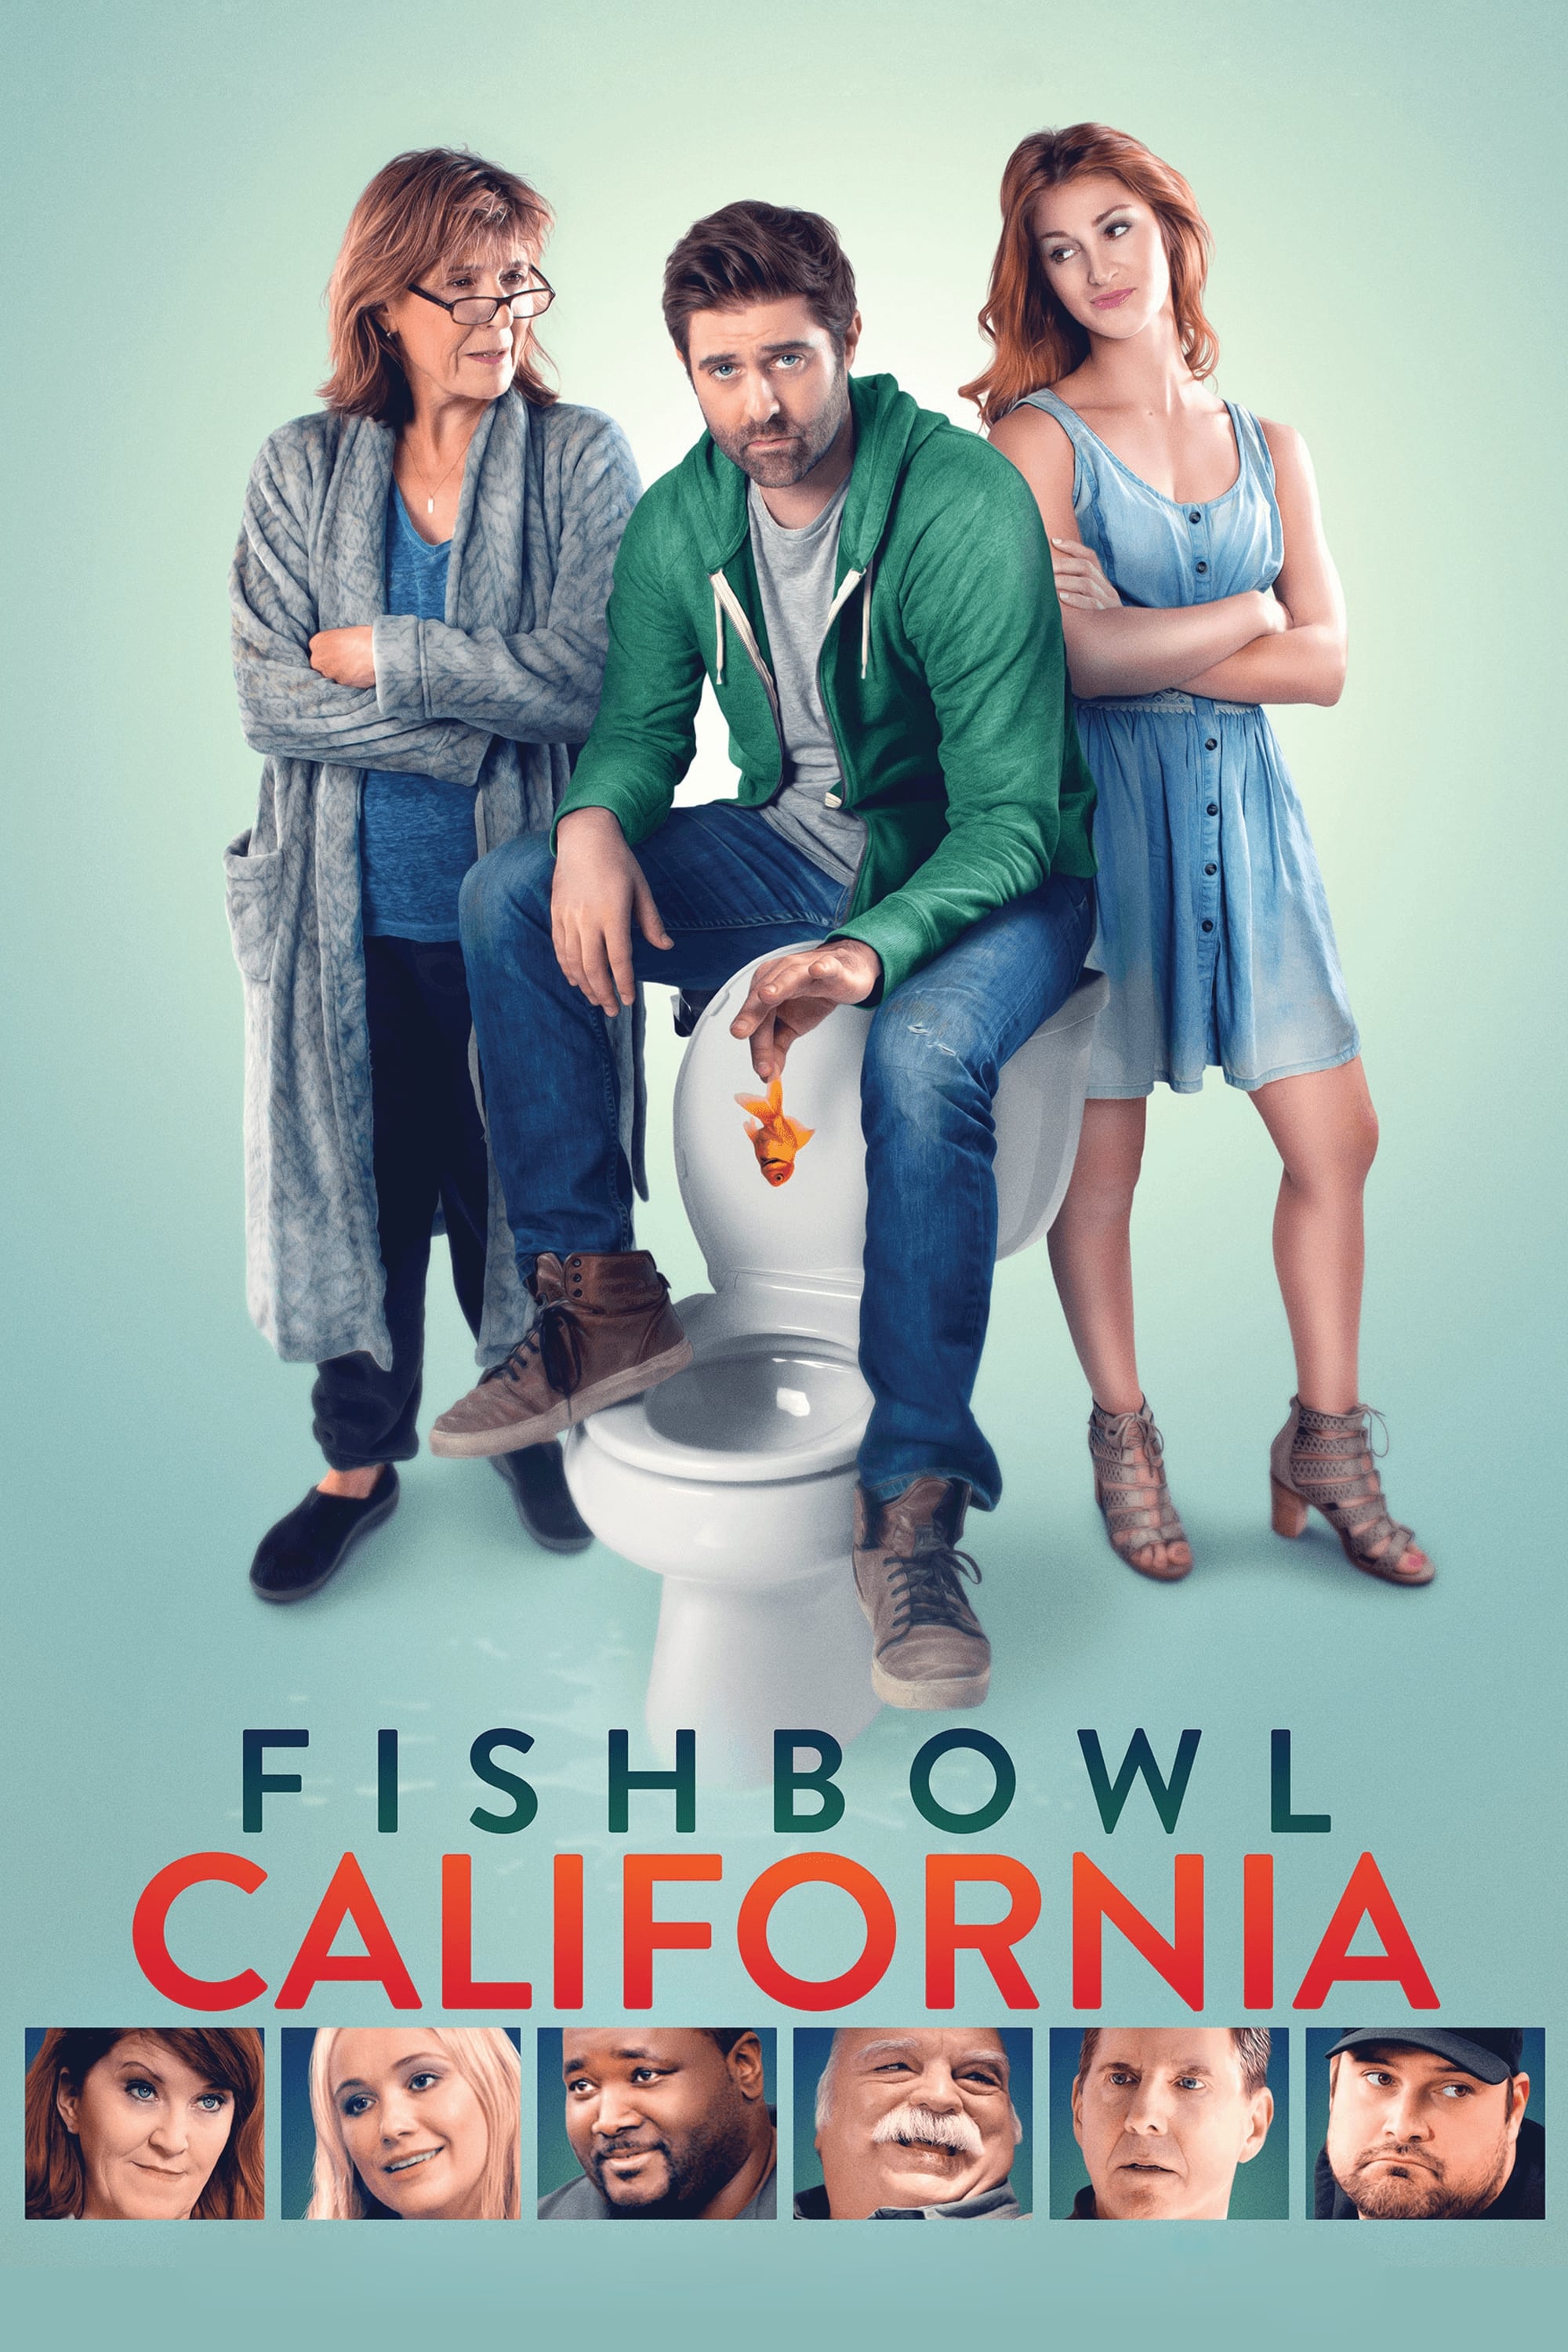 Fishbowl California film